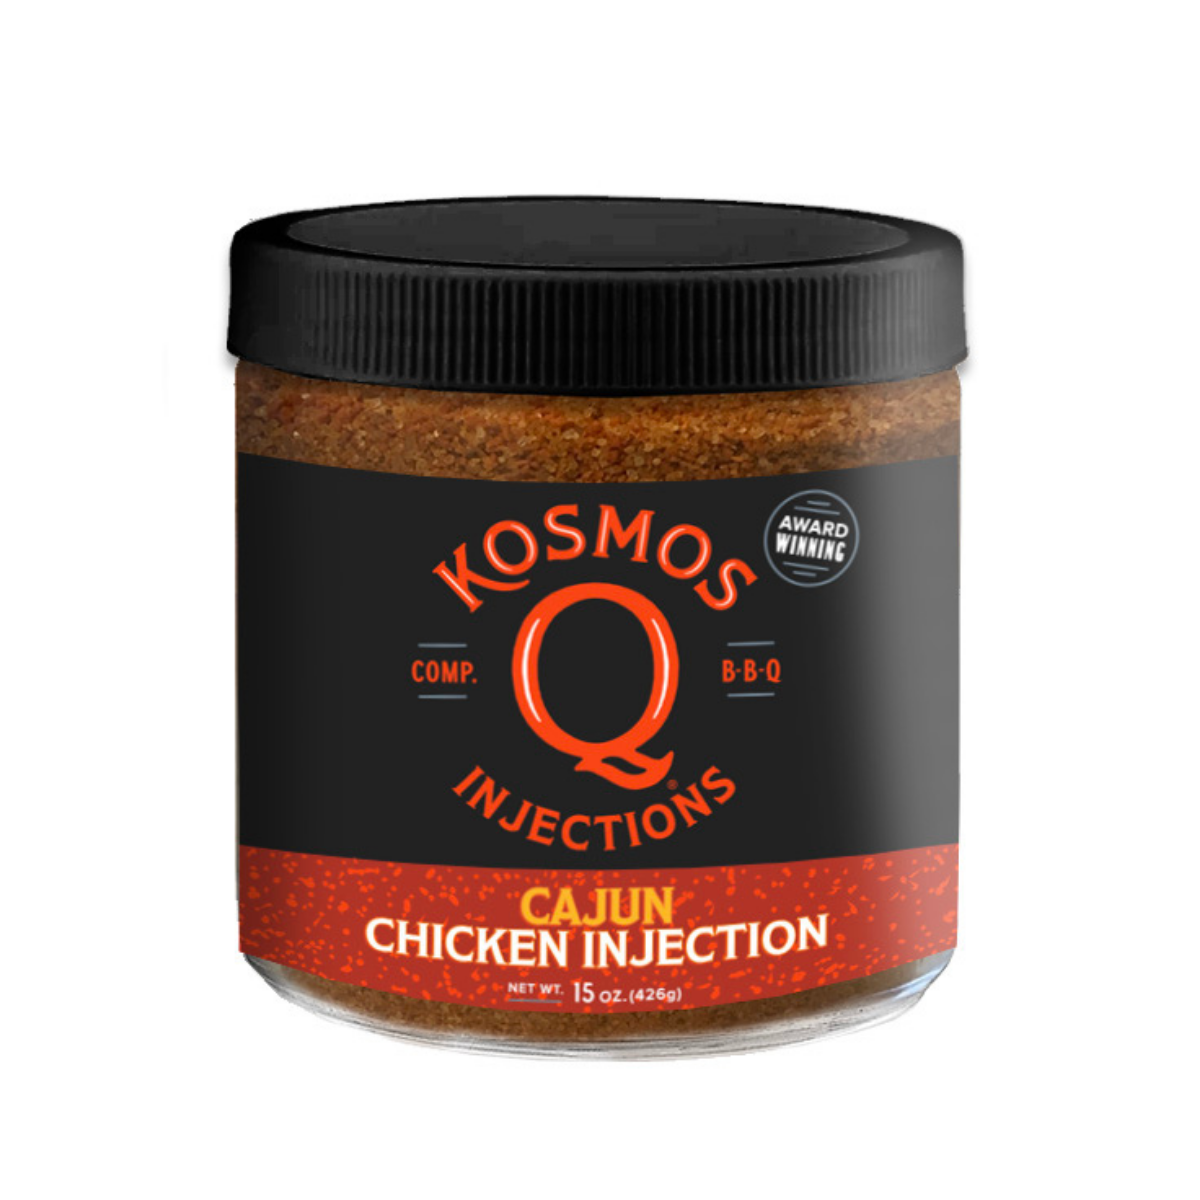 Kosmos Q Paleo & Keto Clean Eating Seasonings  Herbs & Spices - Kosmos Q  BBQ Products & Supplies